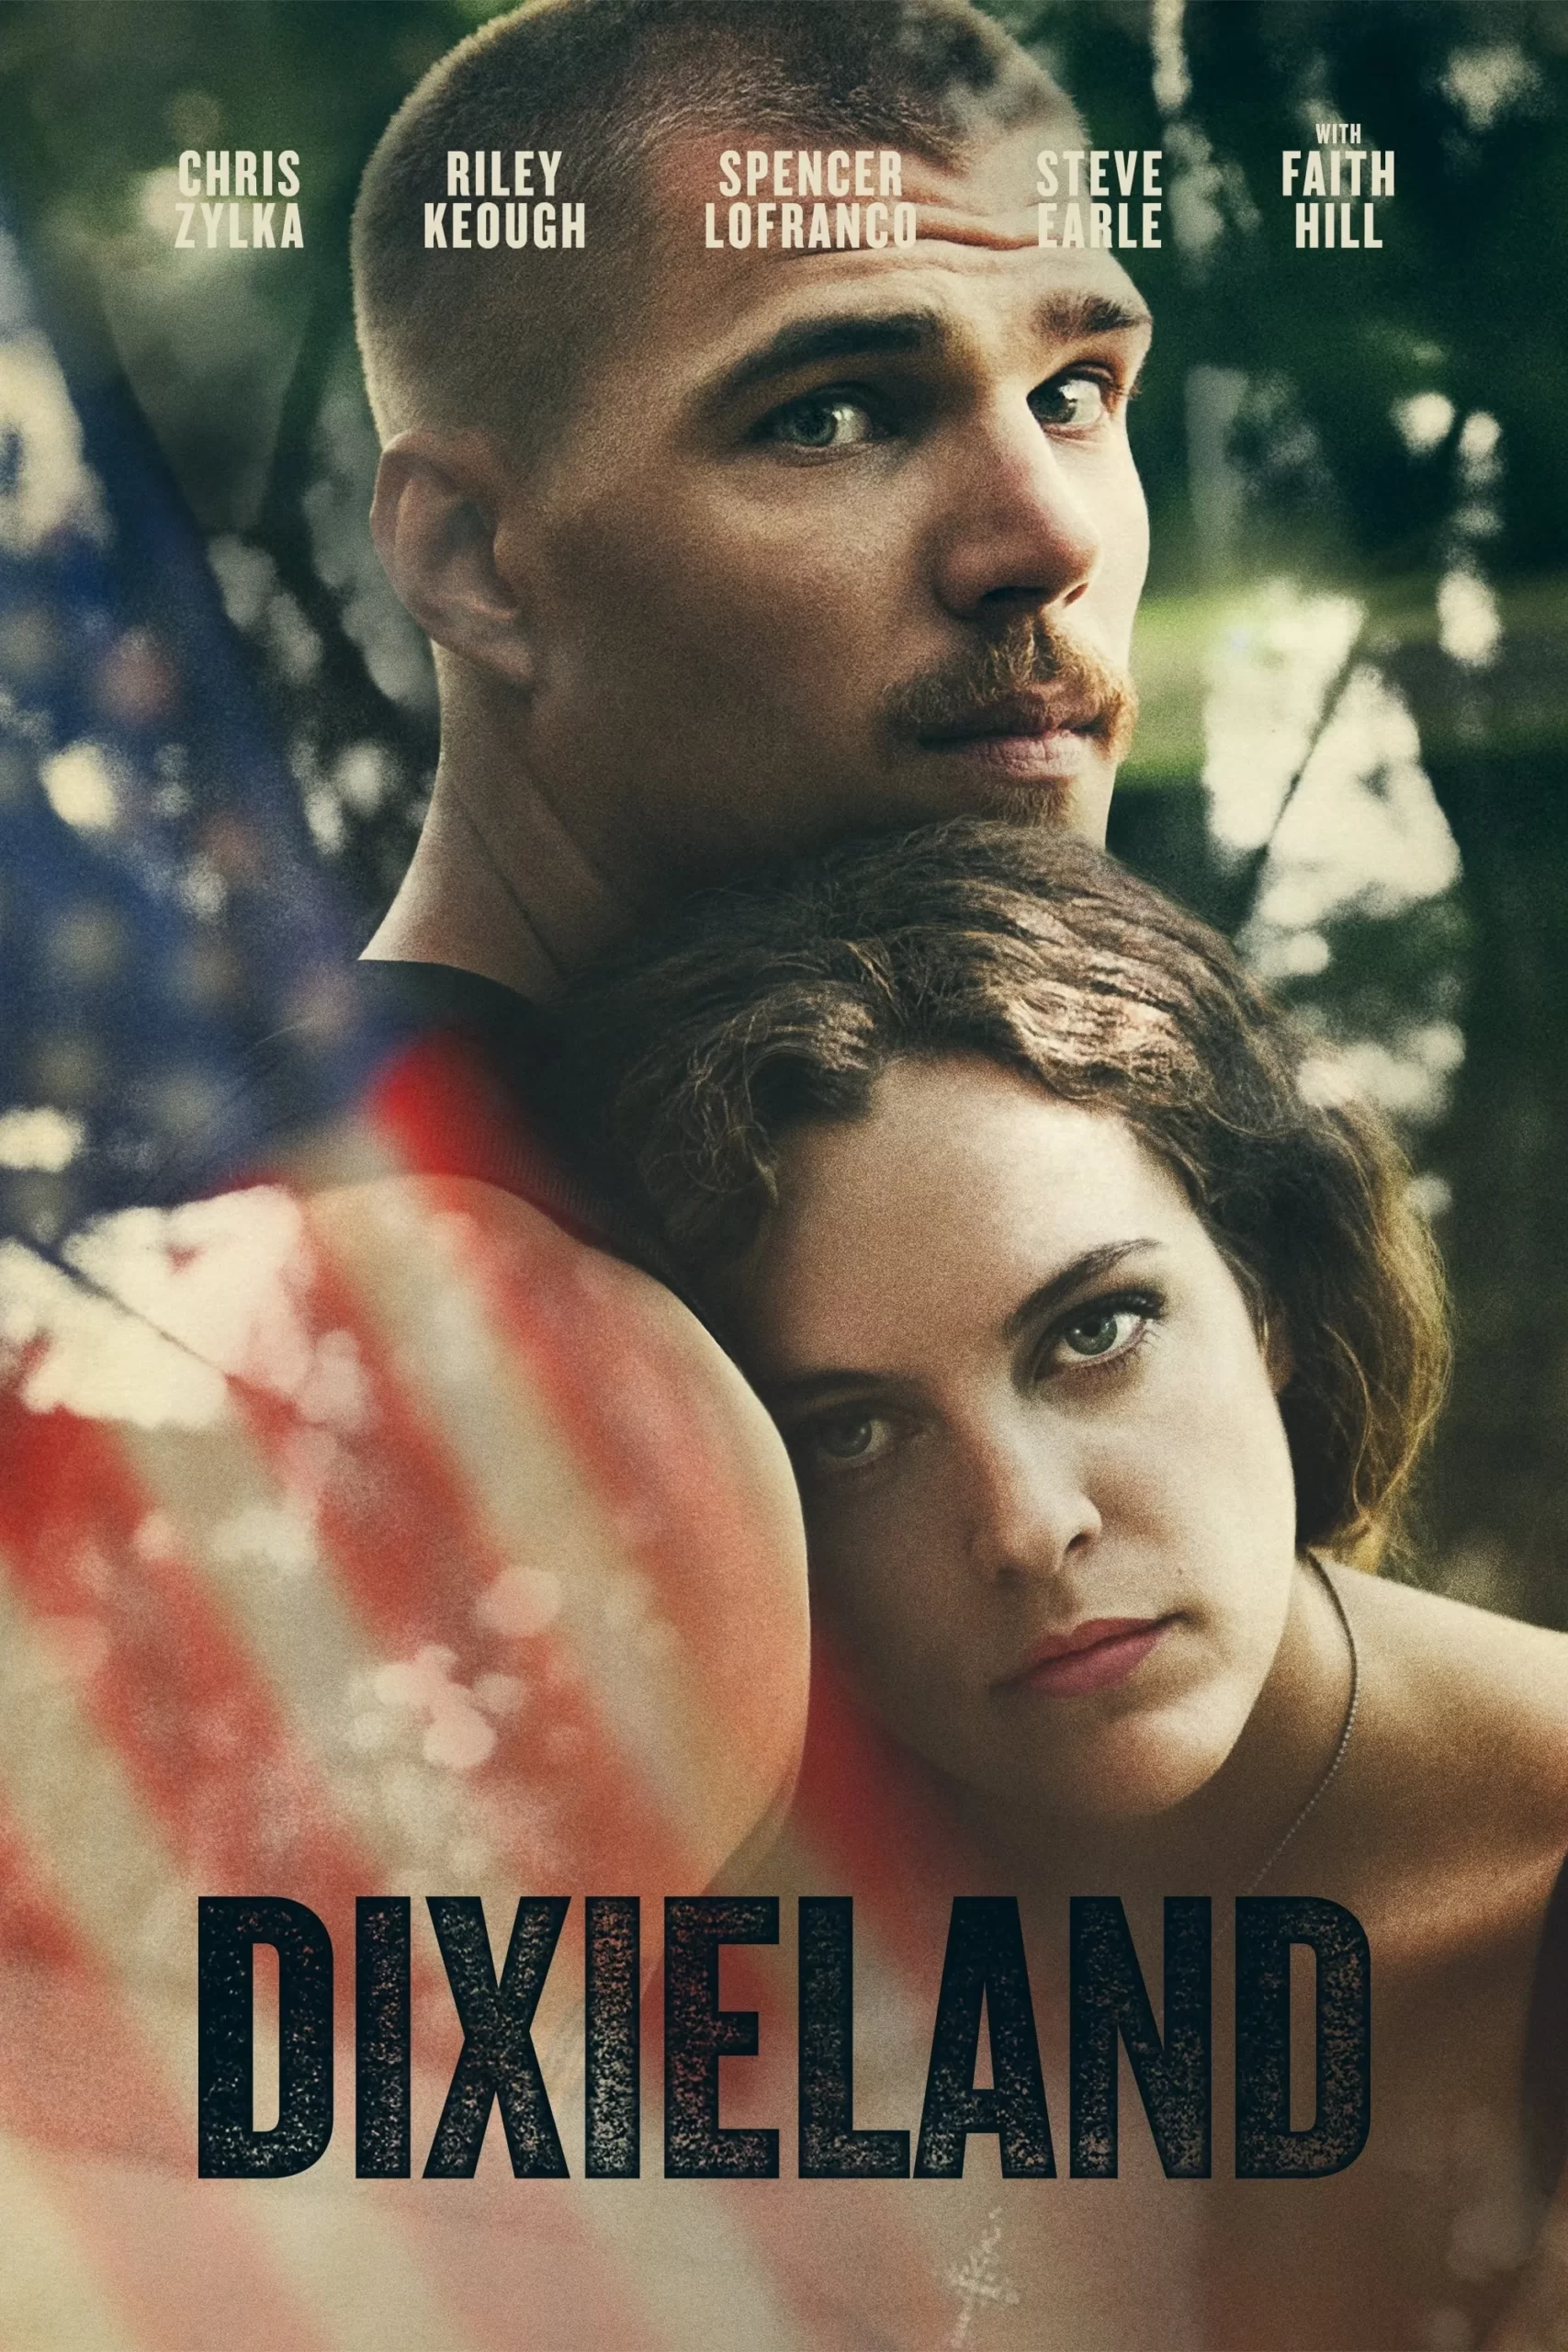 Dixieland (2015)